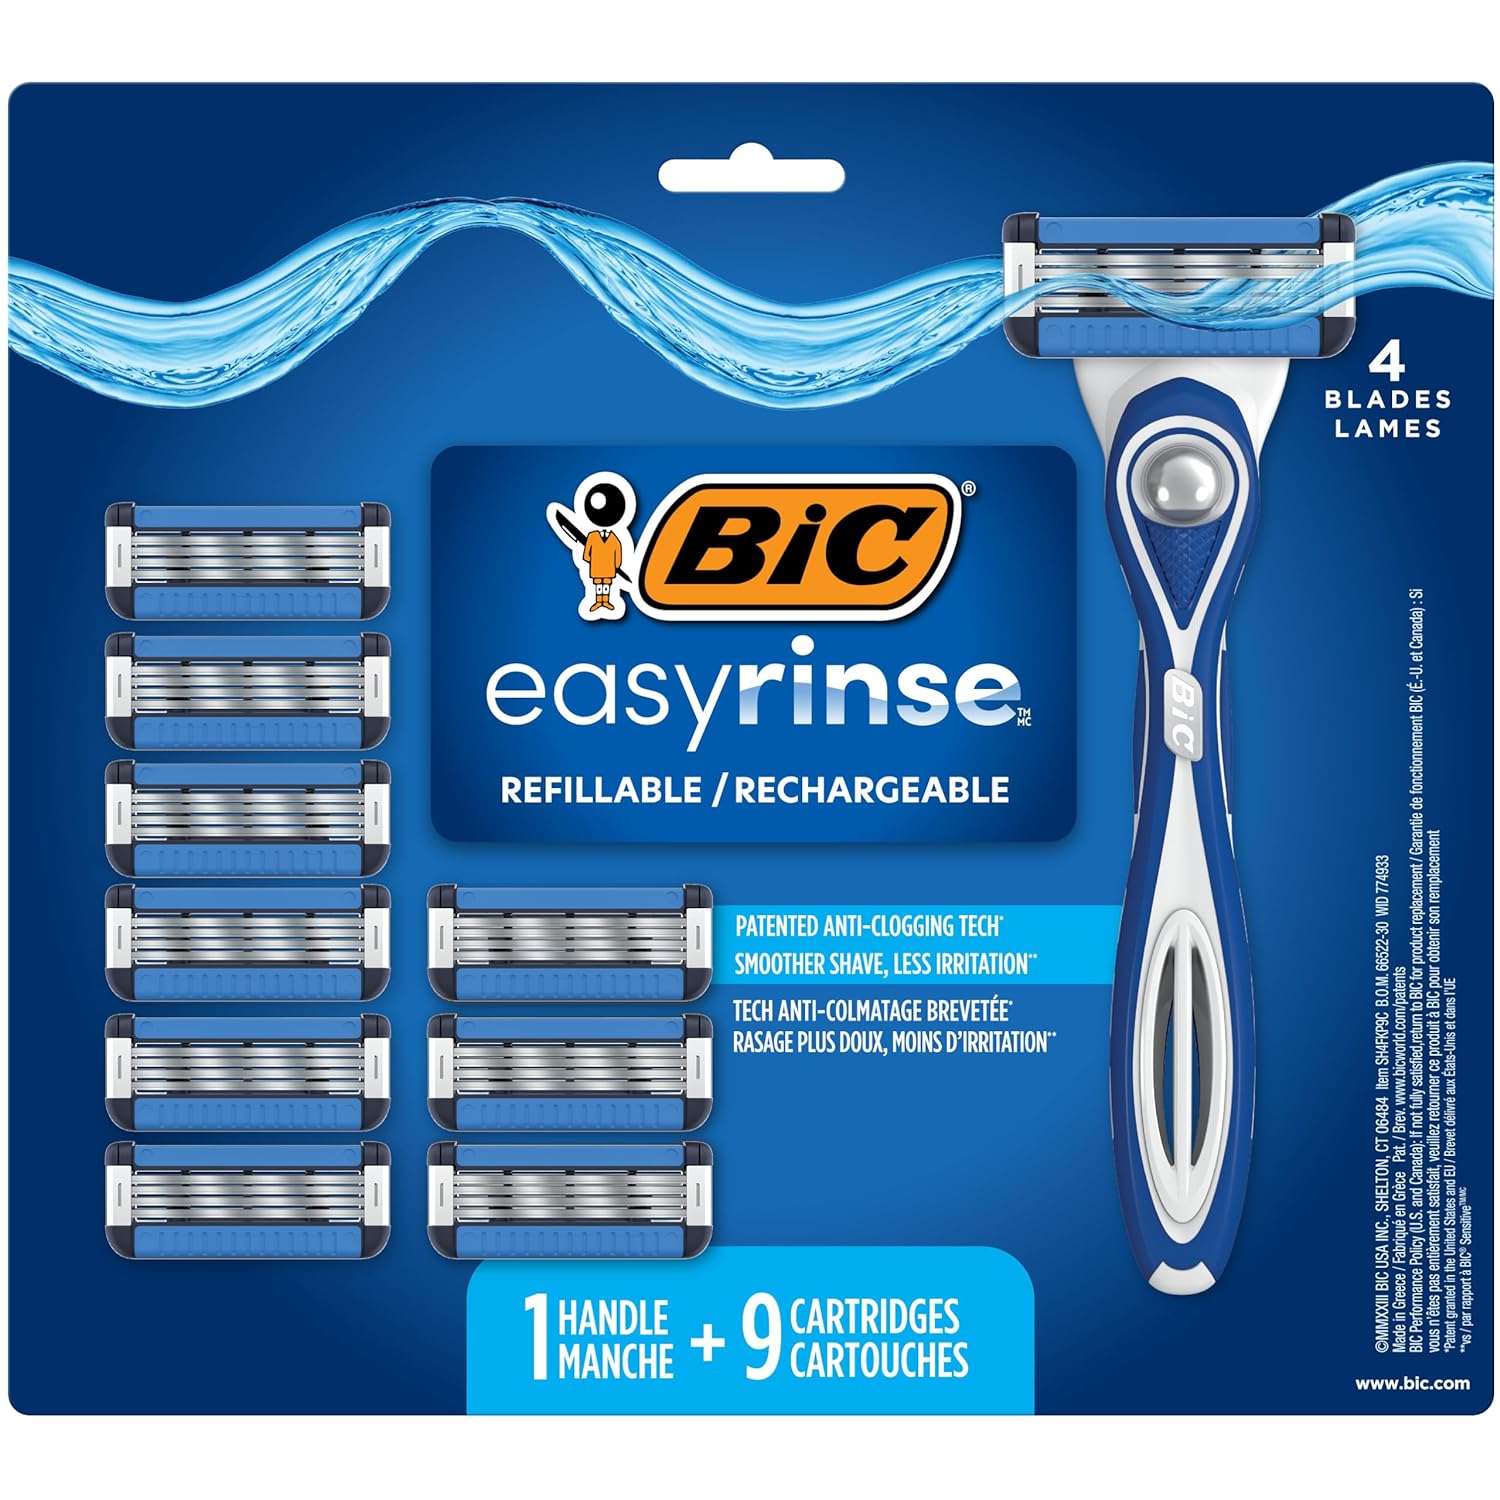 BIC EasyRinse Anti-Clogging, Refillable Men's Razors With 4 Blades, 1 Handle and 9 Refill Razor Cartridges Razor Kit